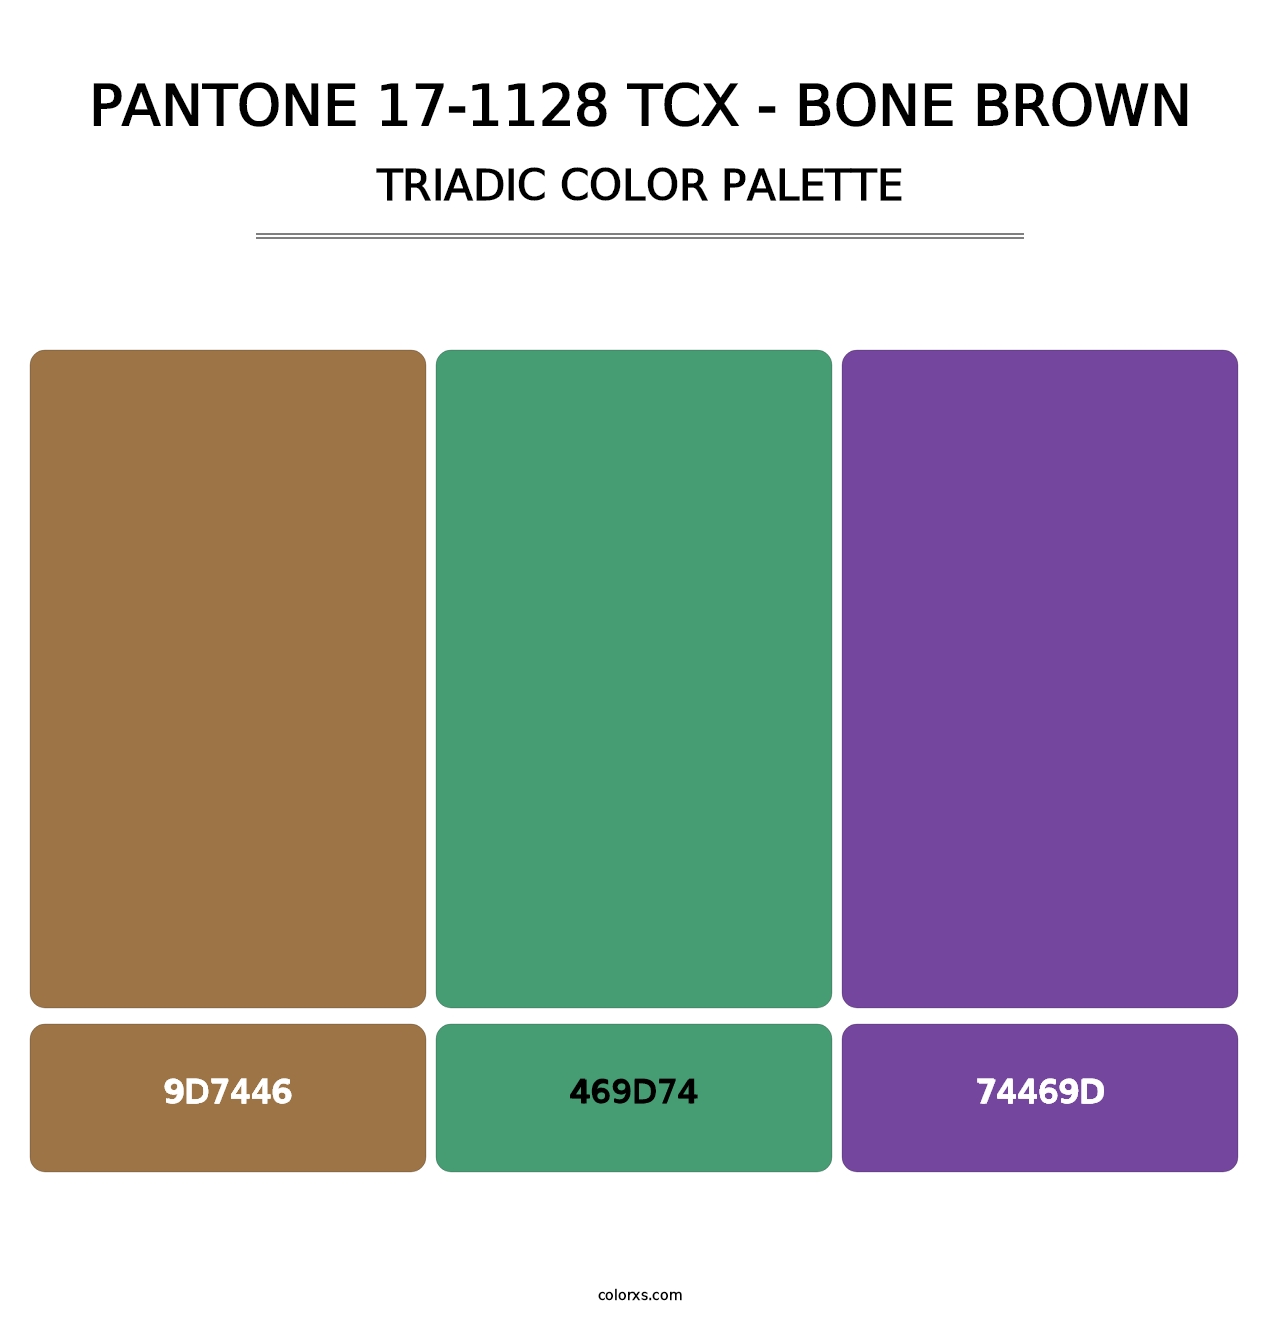 PANTONE 17-1128 TCX - Bone Brown - Triadic Color Palette